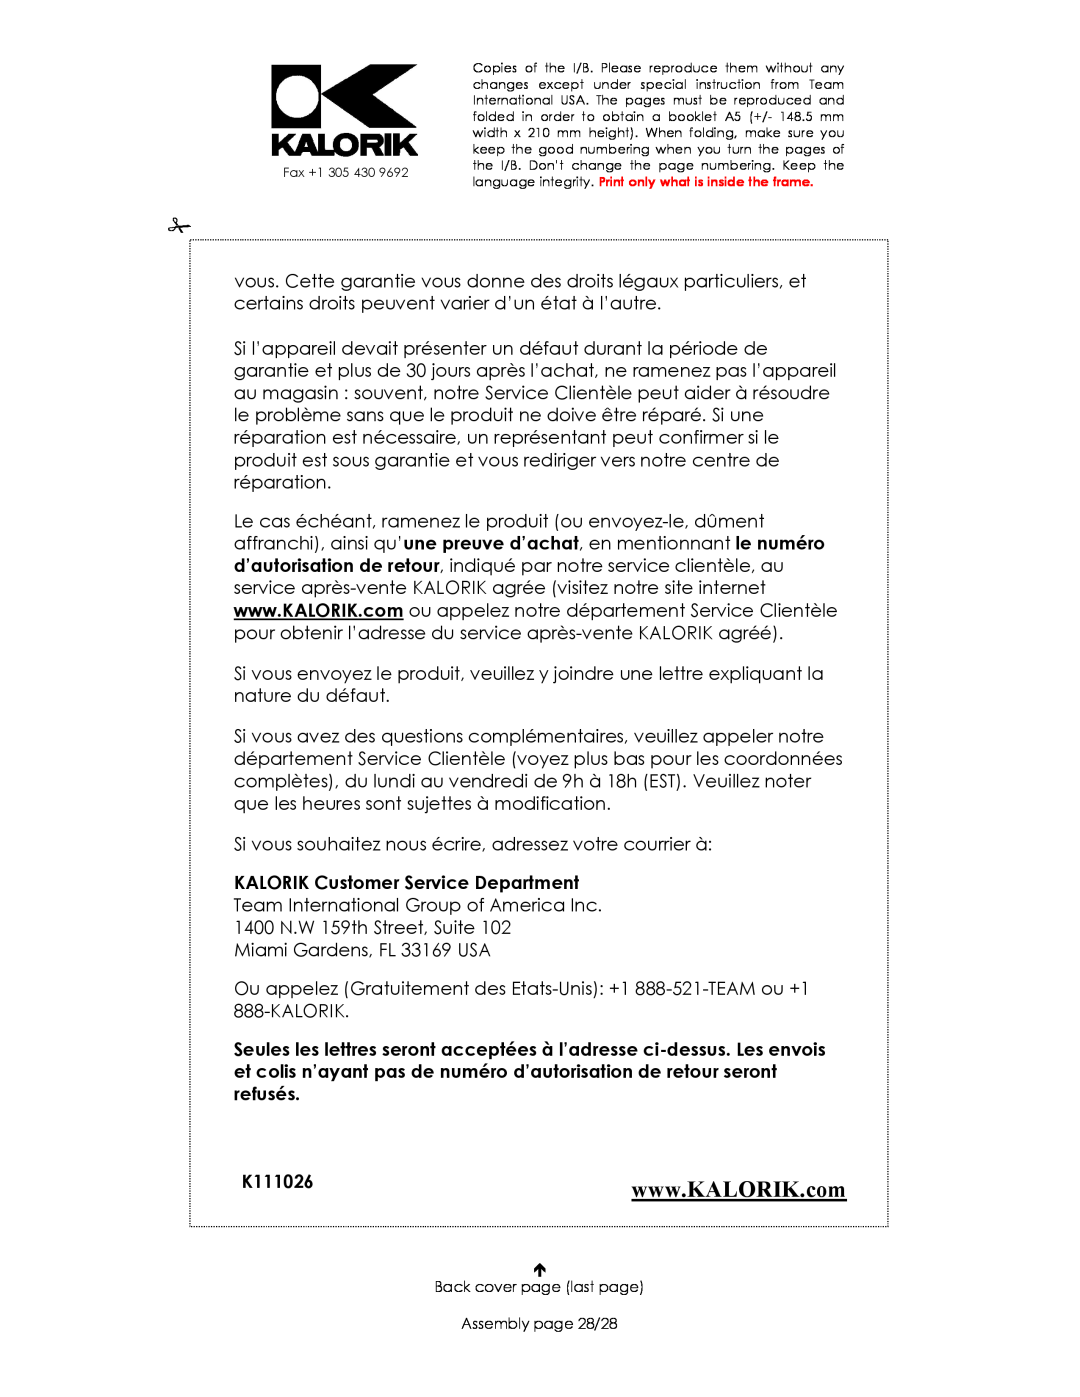 Kalorik USK BSET 15191 manual K111026, KALORIK Customer Service Department 